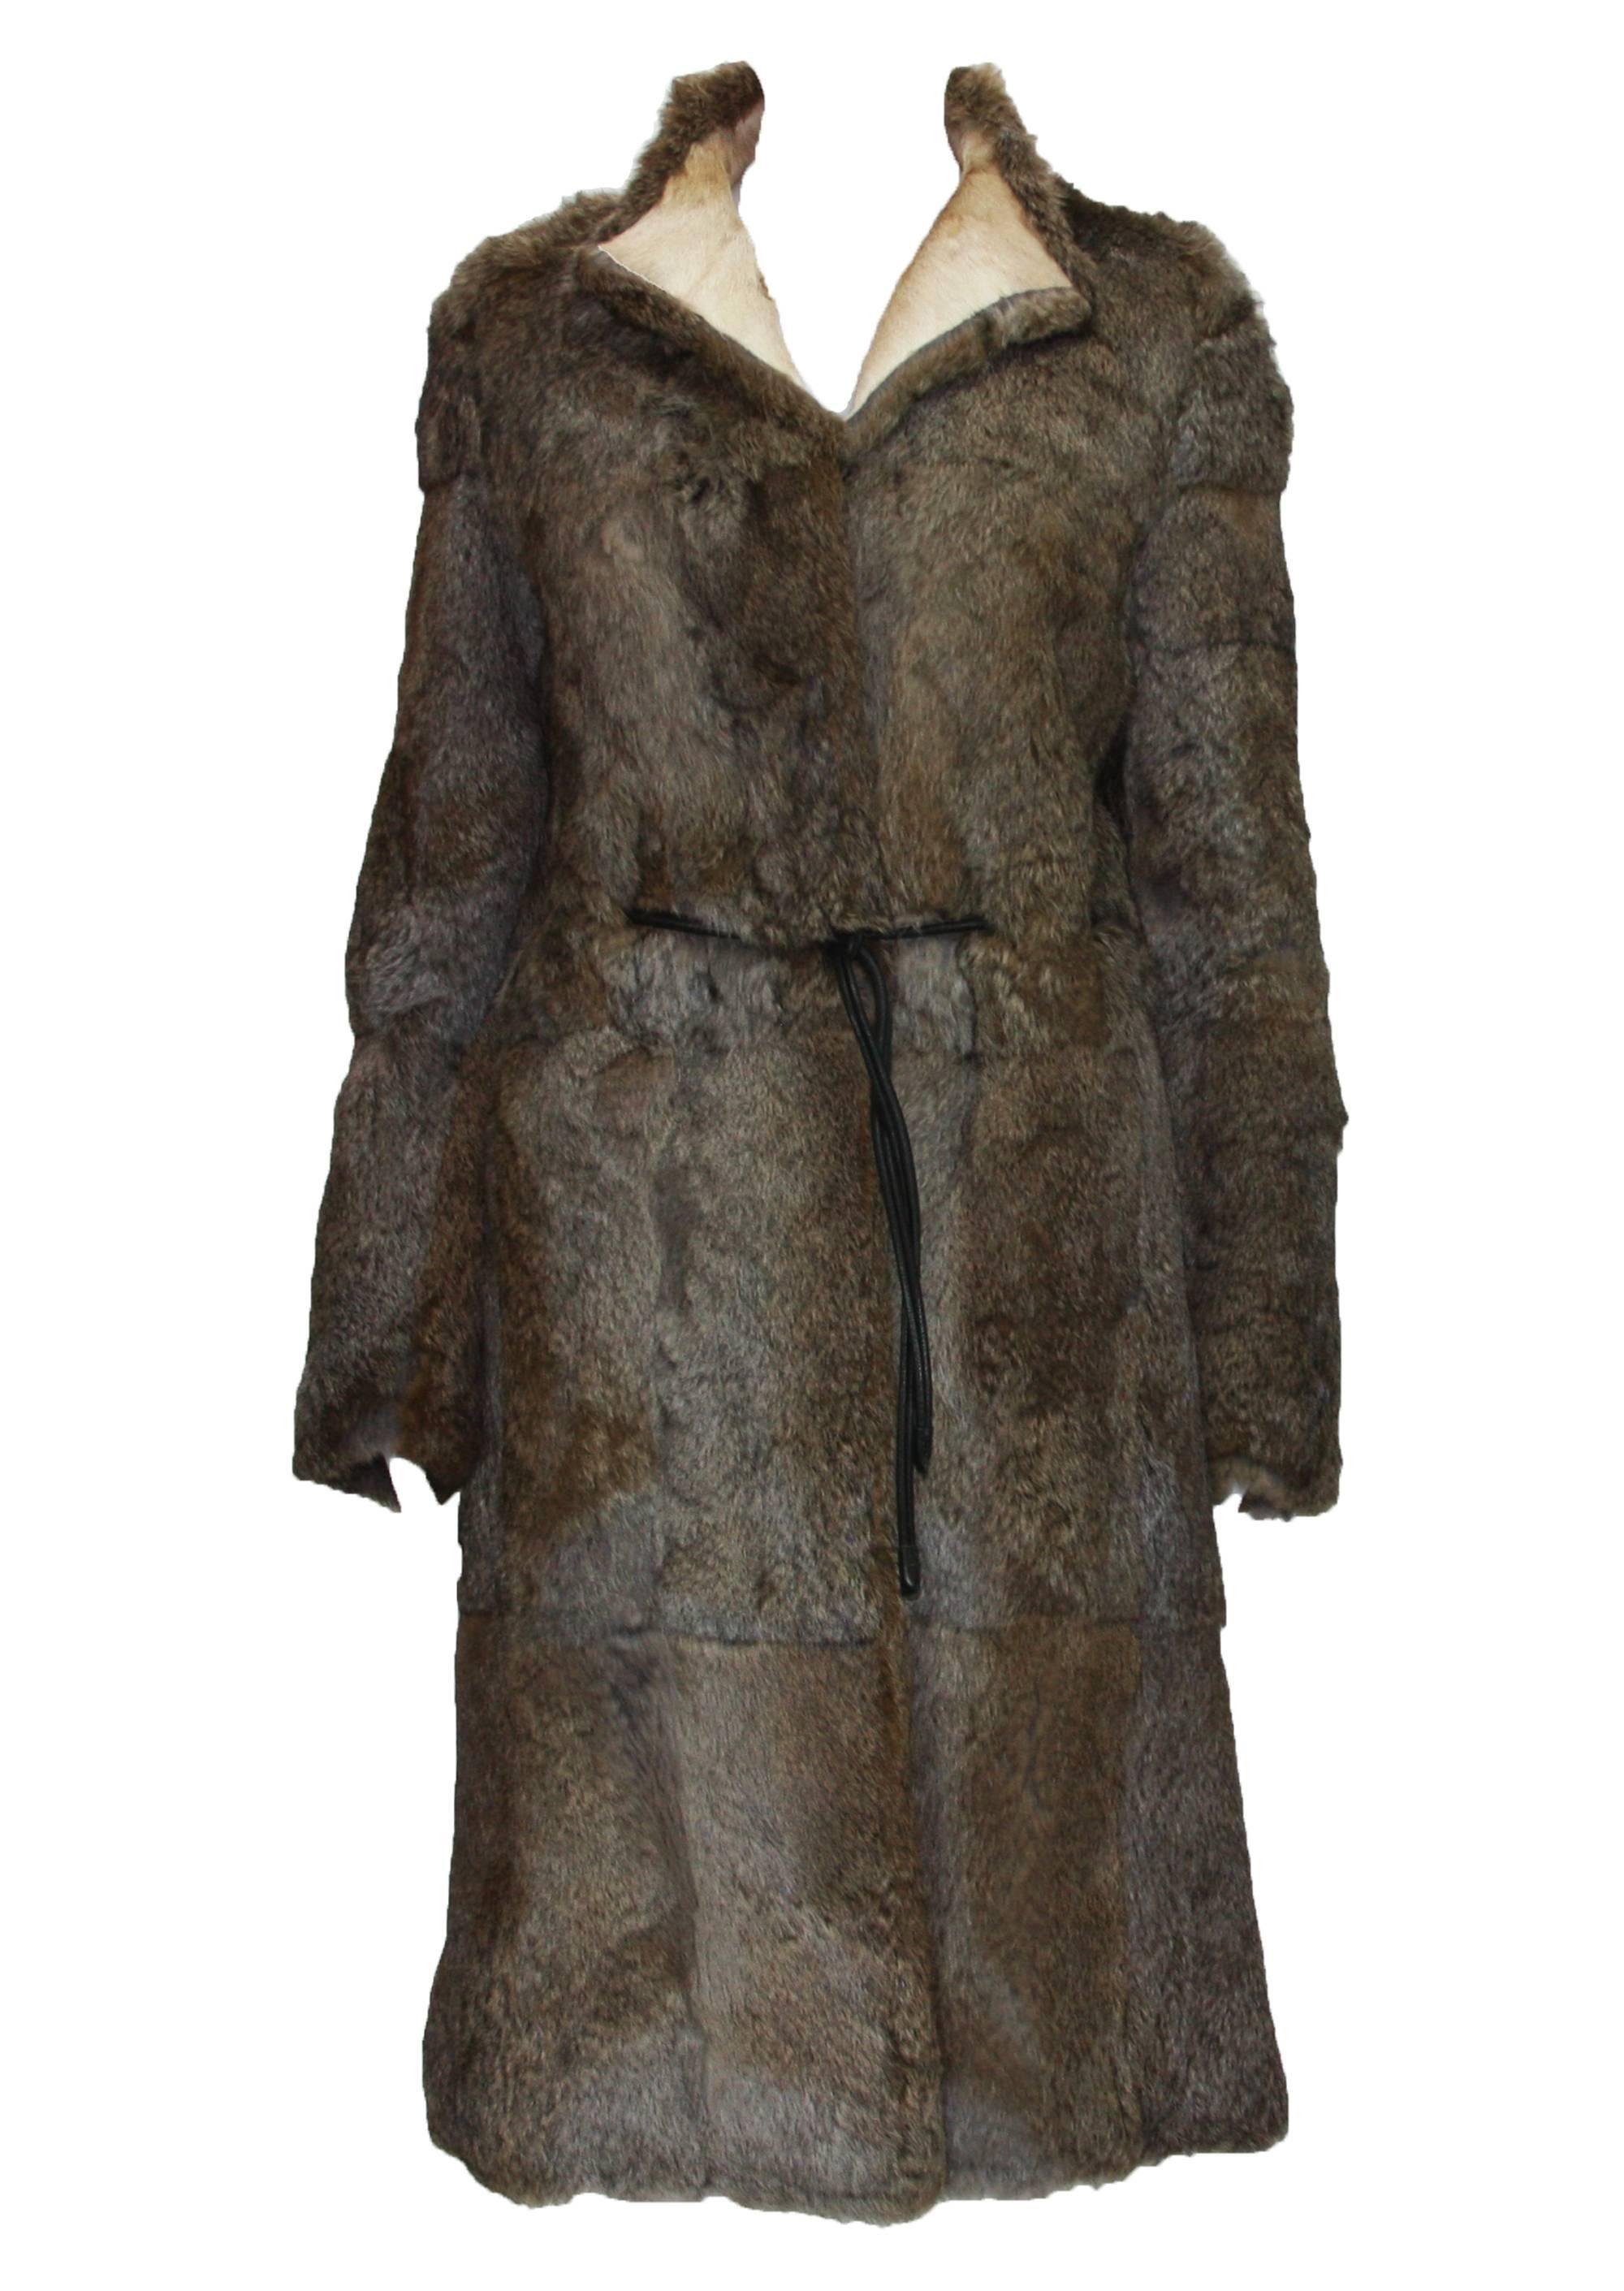 Tom Ford for Gucci Reversible Fur Beige Coat 3